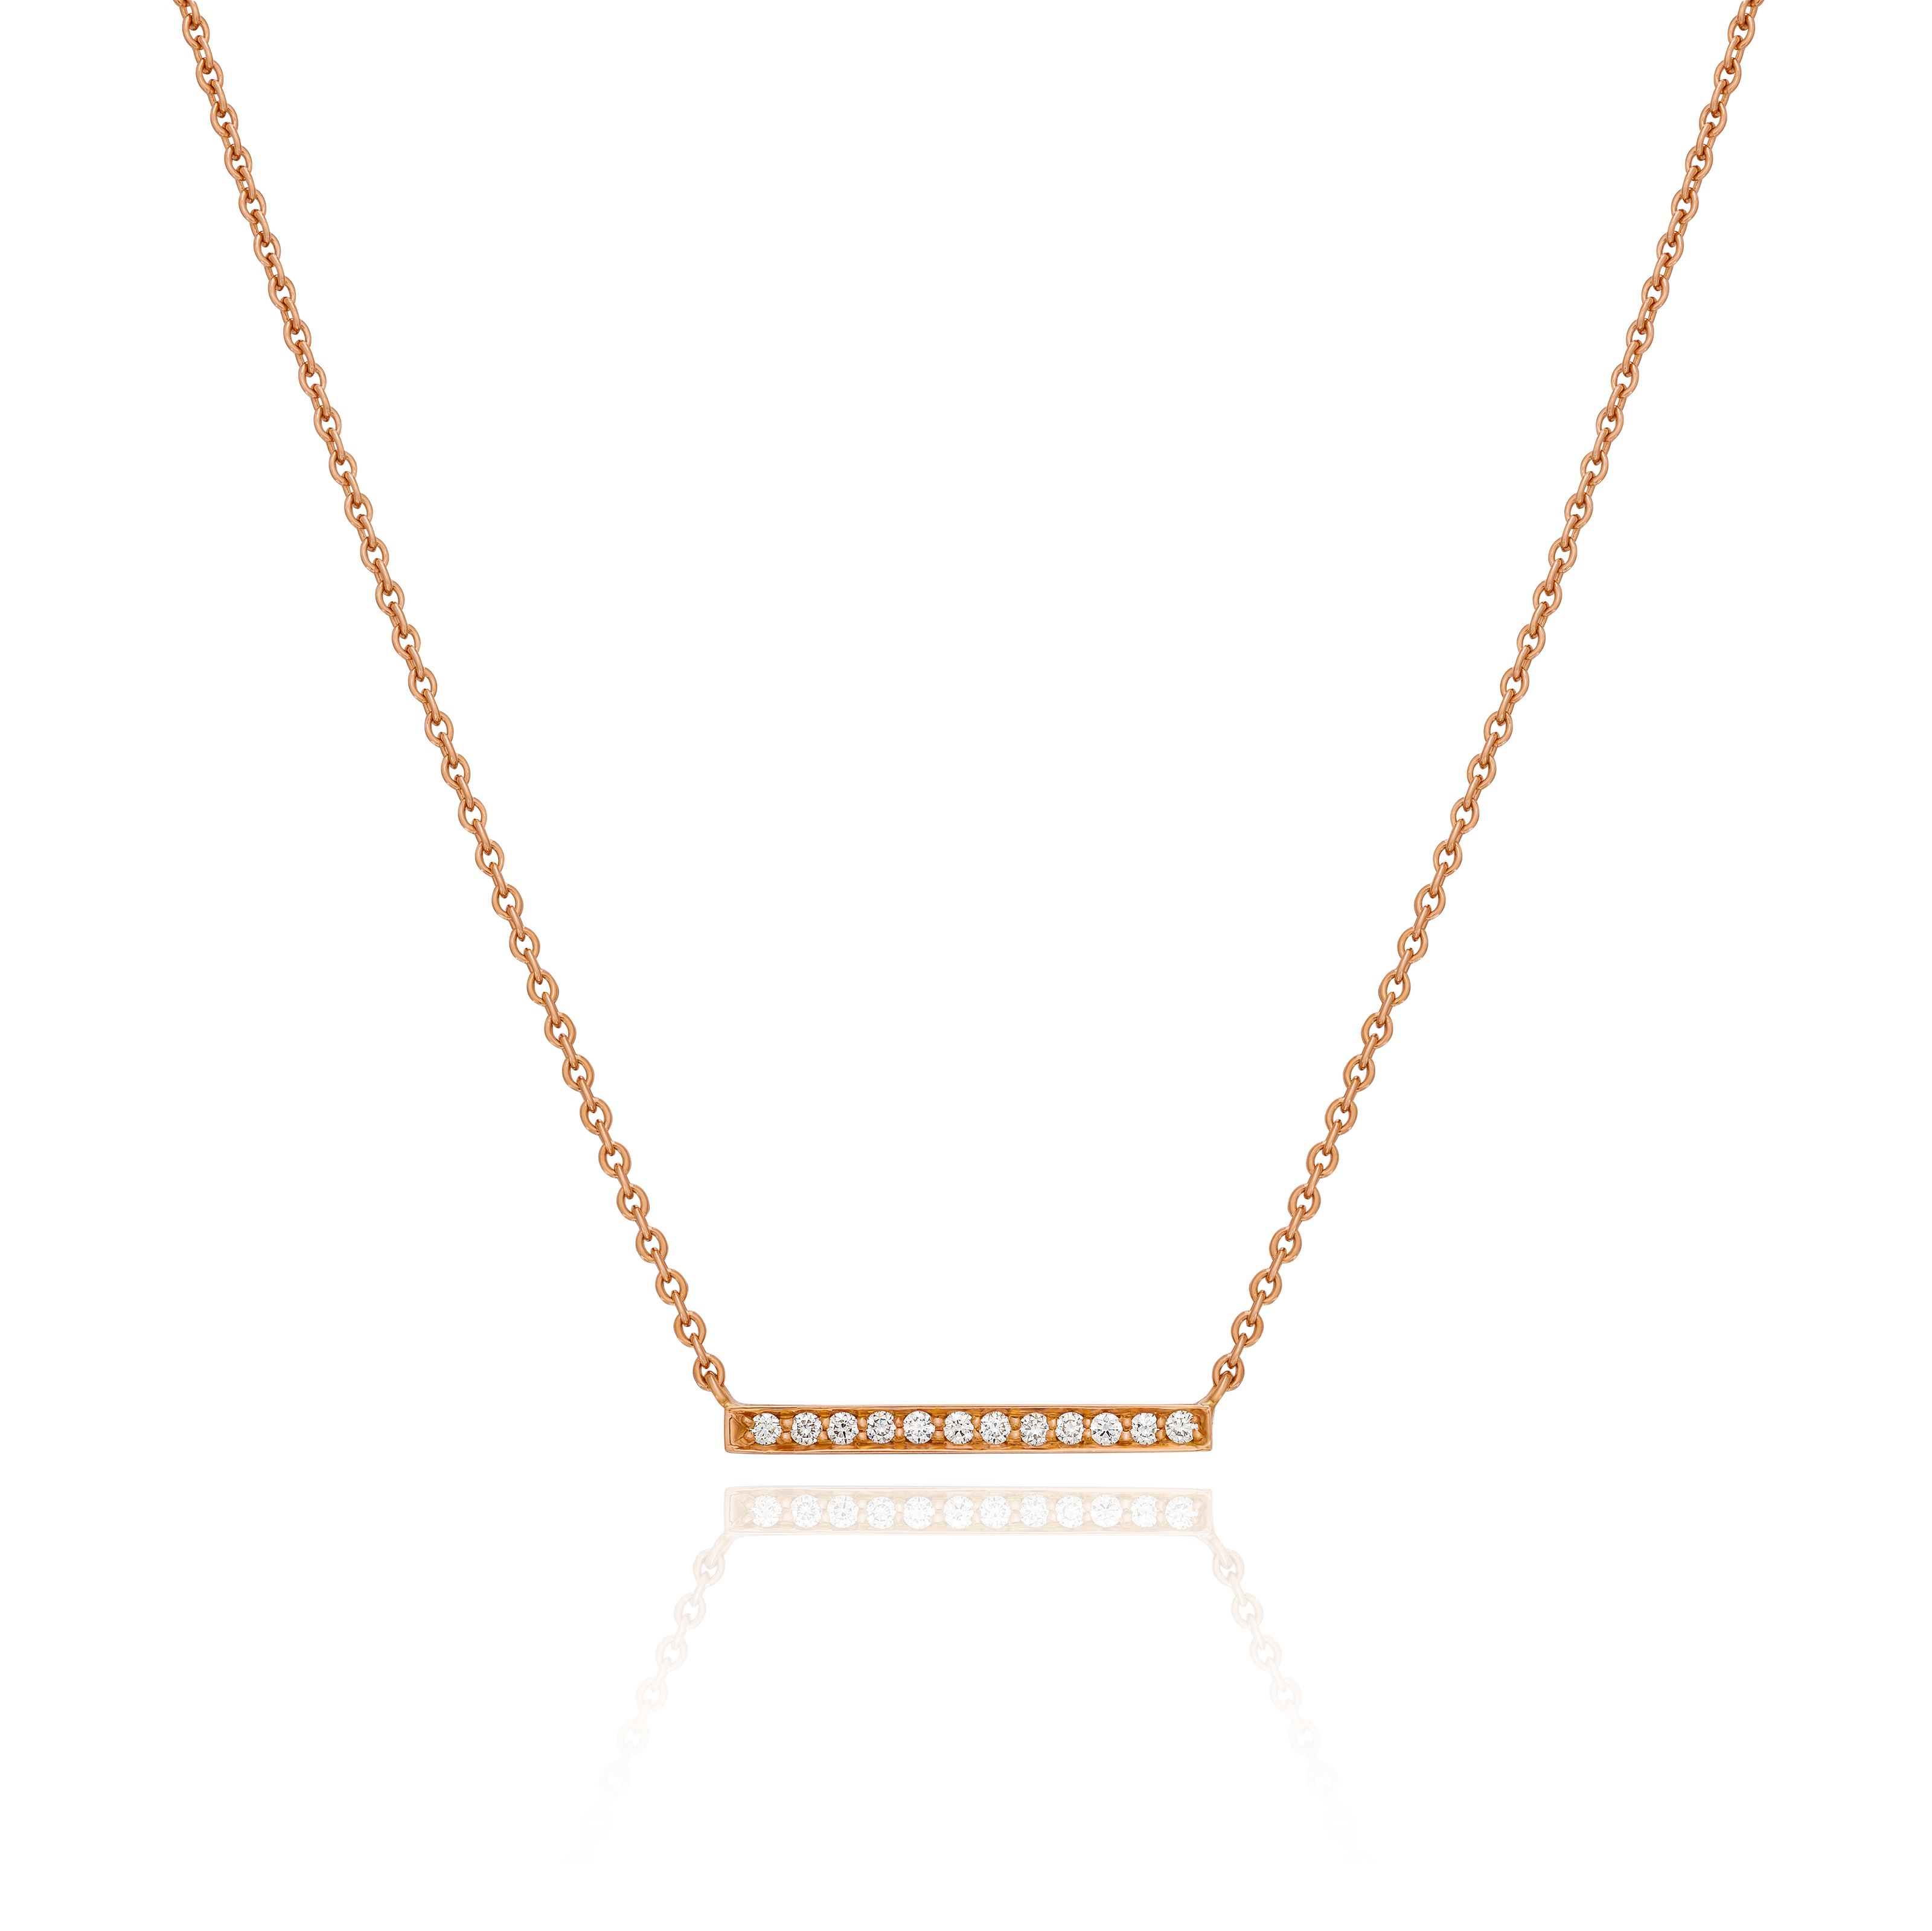 Skyline Diamond-Set Horizontal 18ct Rose Gold Pendant